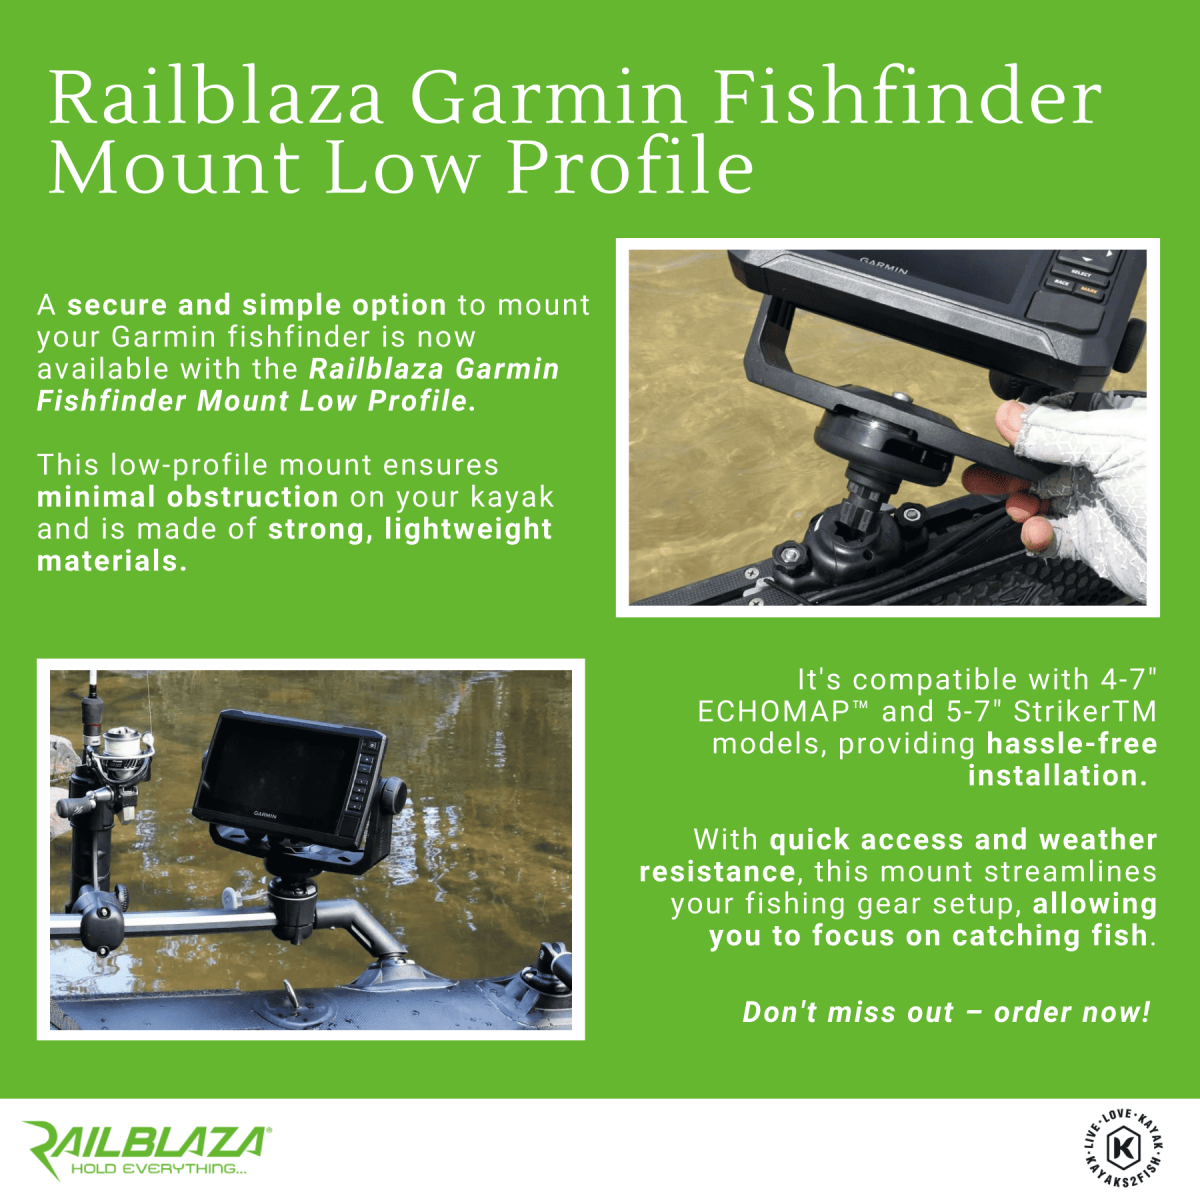 Railblaza Garmin Fishfinder Mount Low Profile